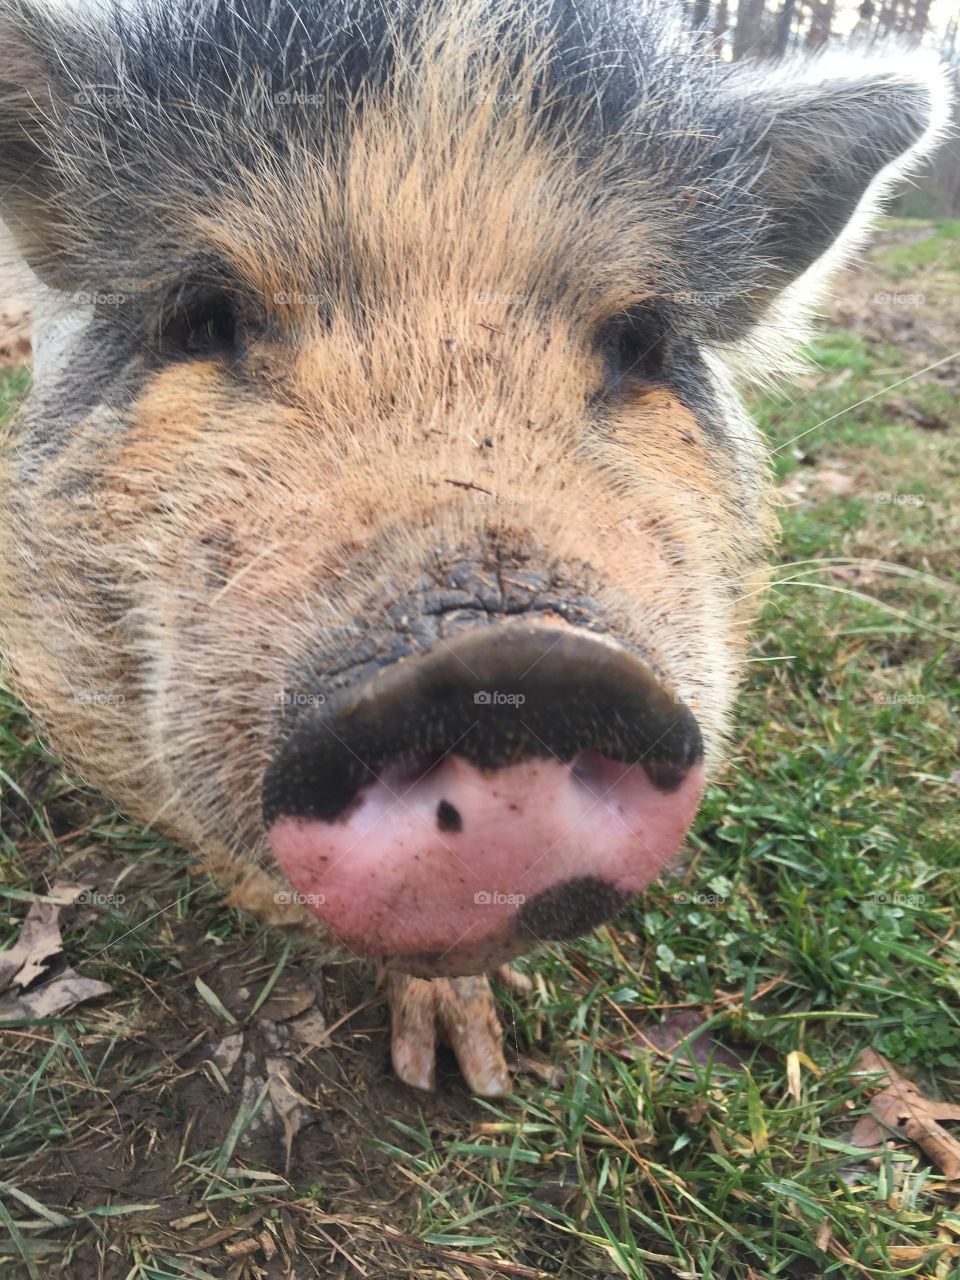 Adorable pig on the farm!